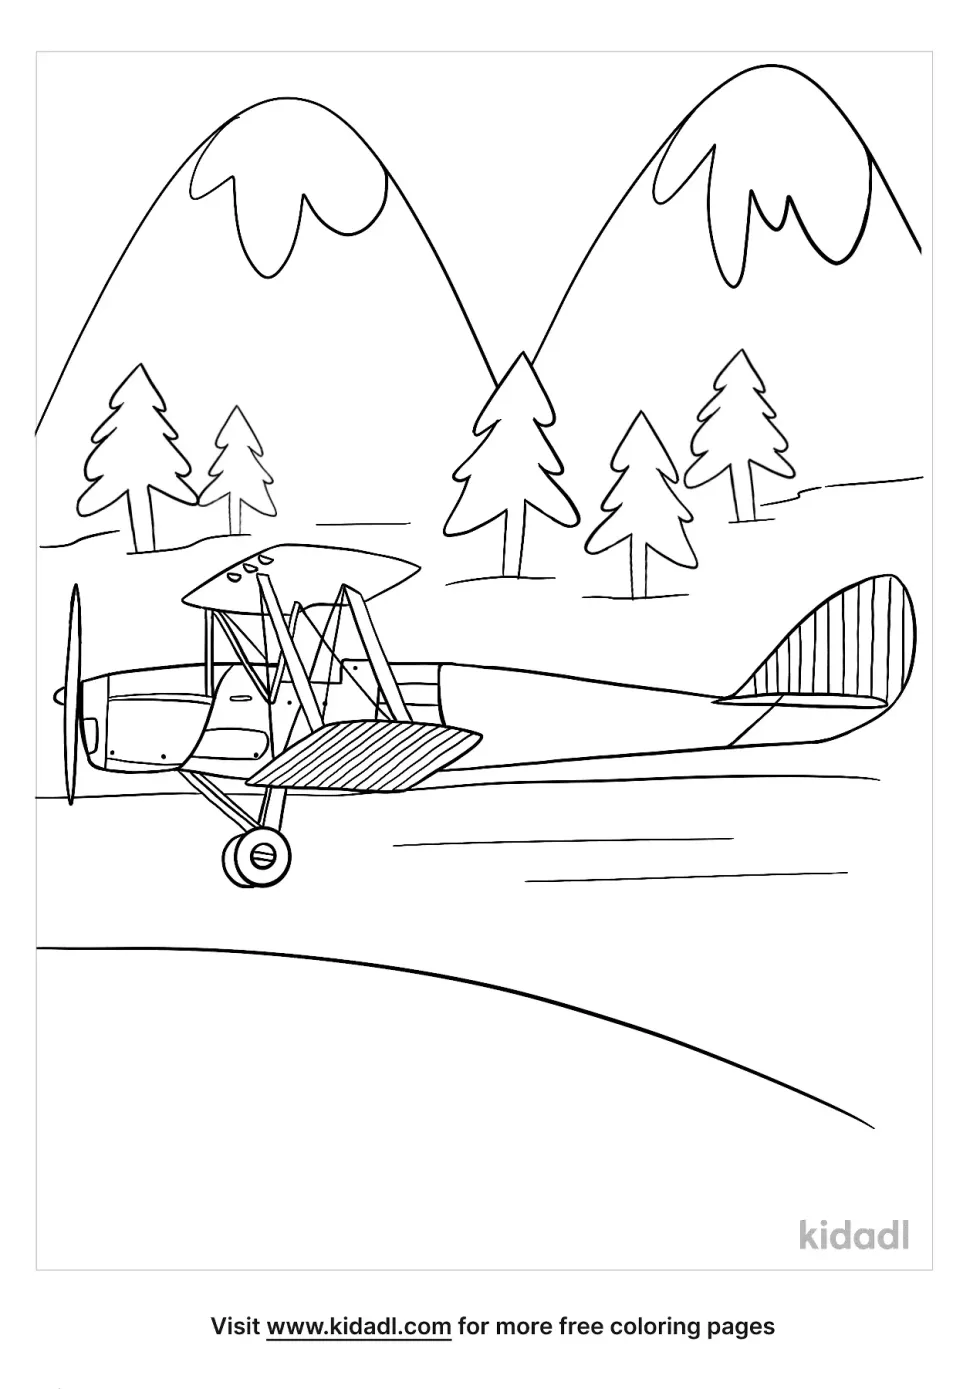 Biplane Coloring Page